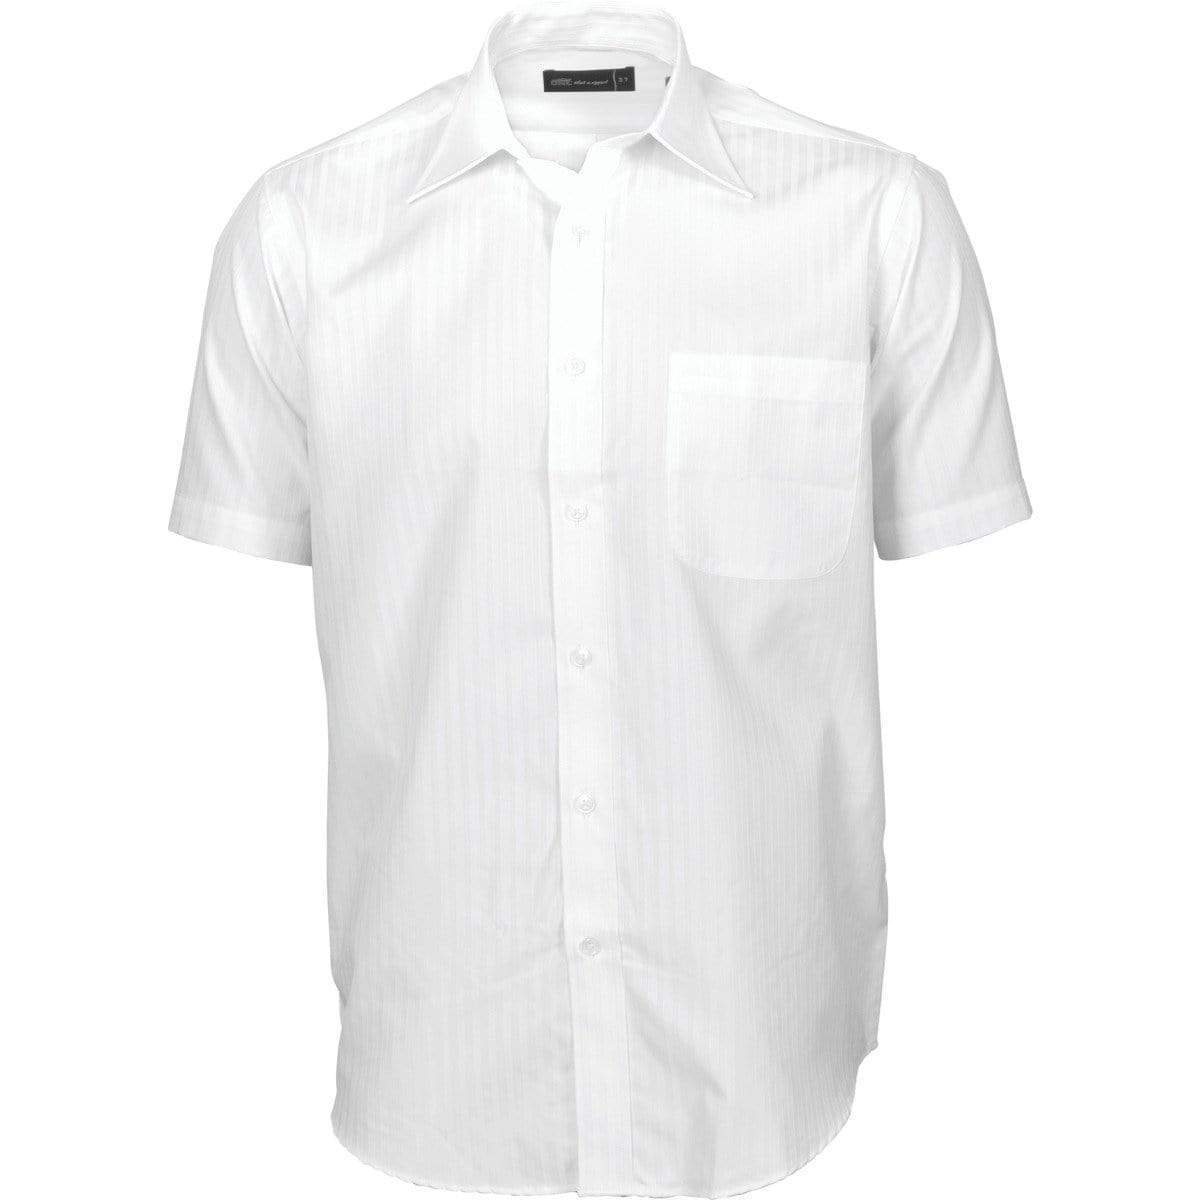 Dnc Workwear Men’s Tonal Stripe Short Sleeve Shirt - 4155 Corporate Wear DNC Workwear White 37 